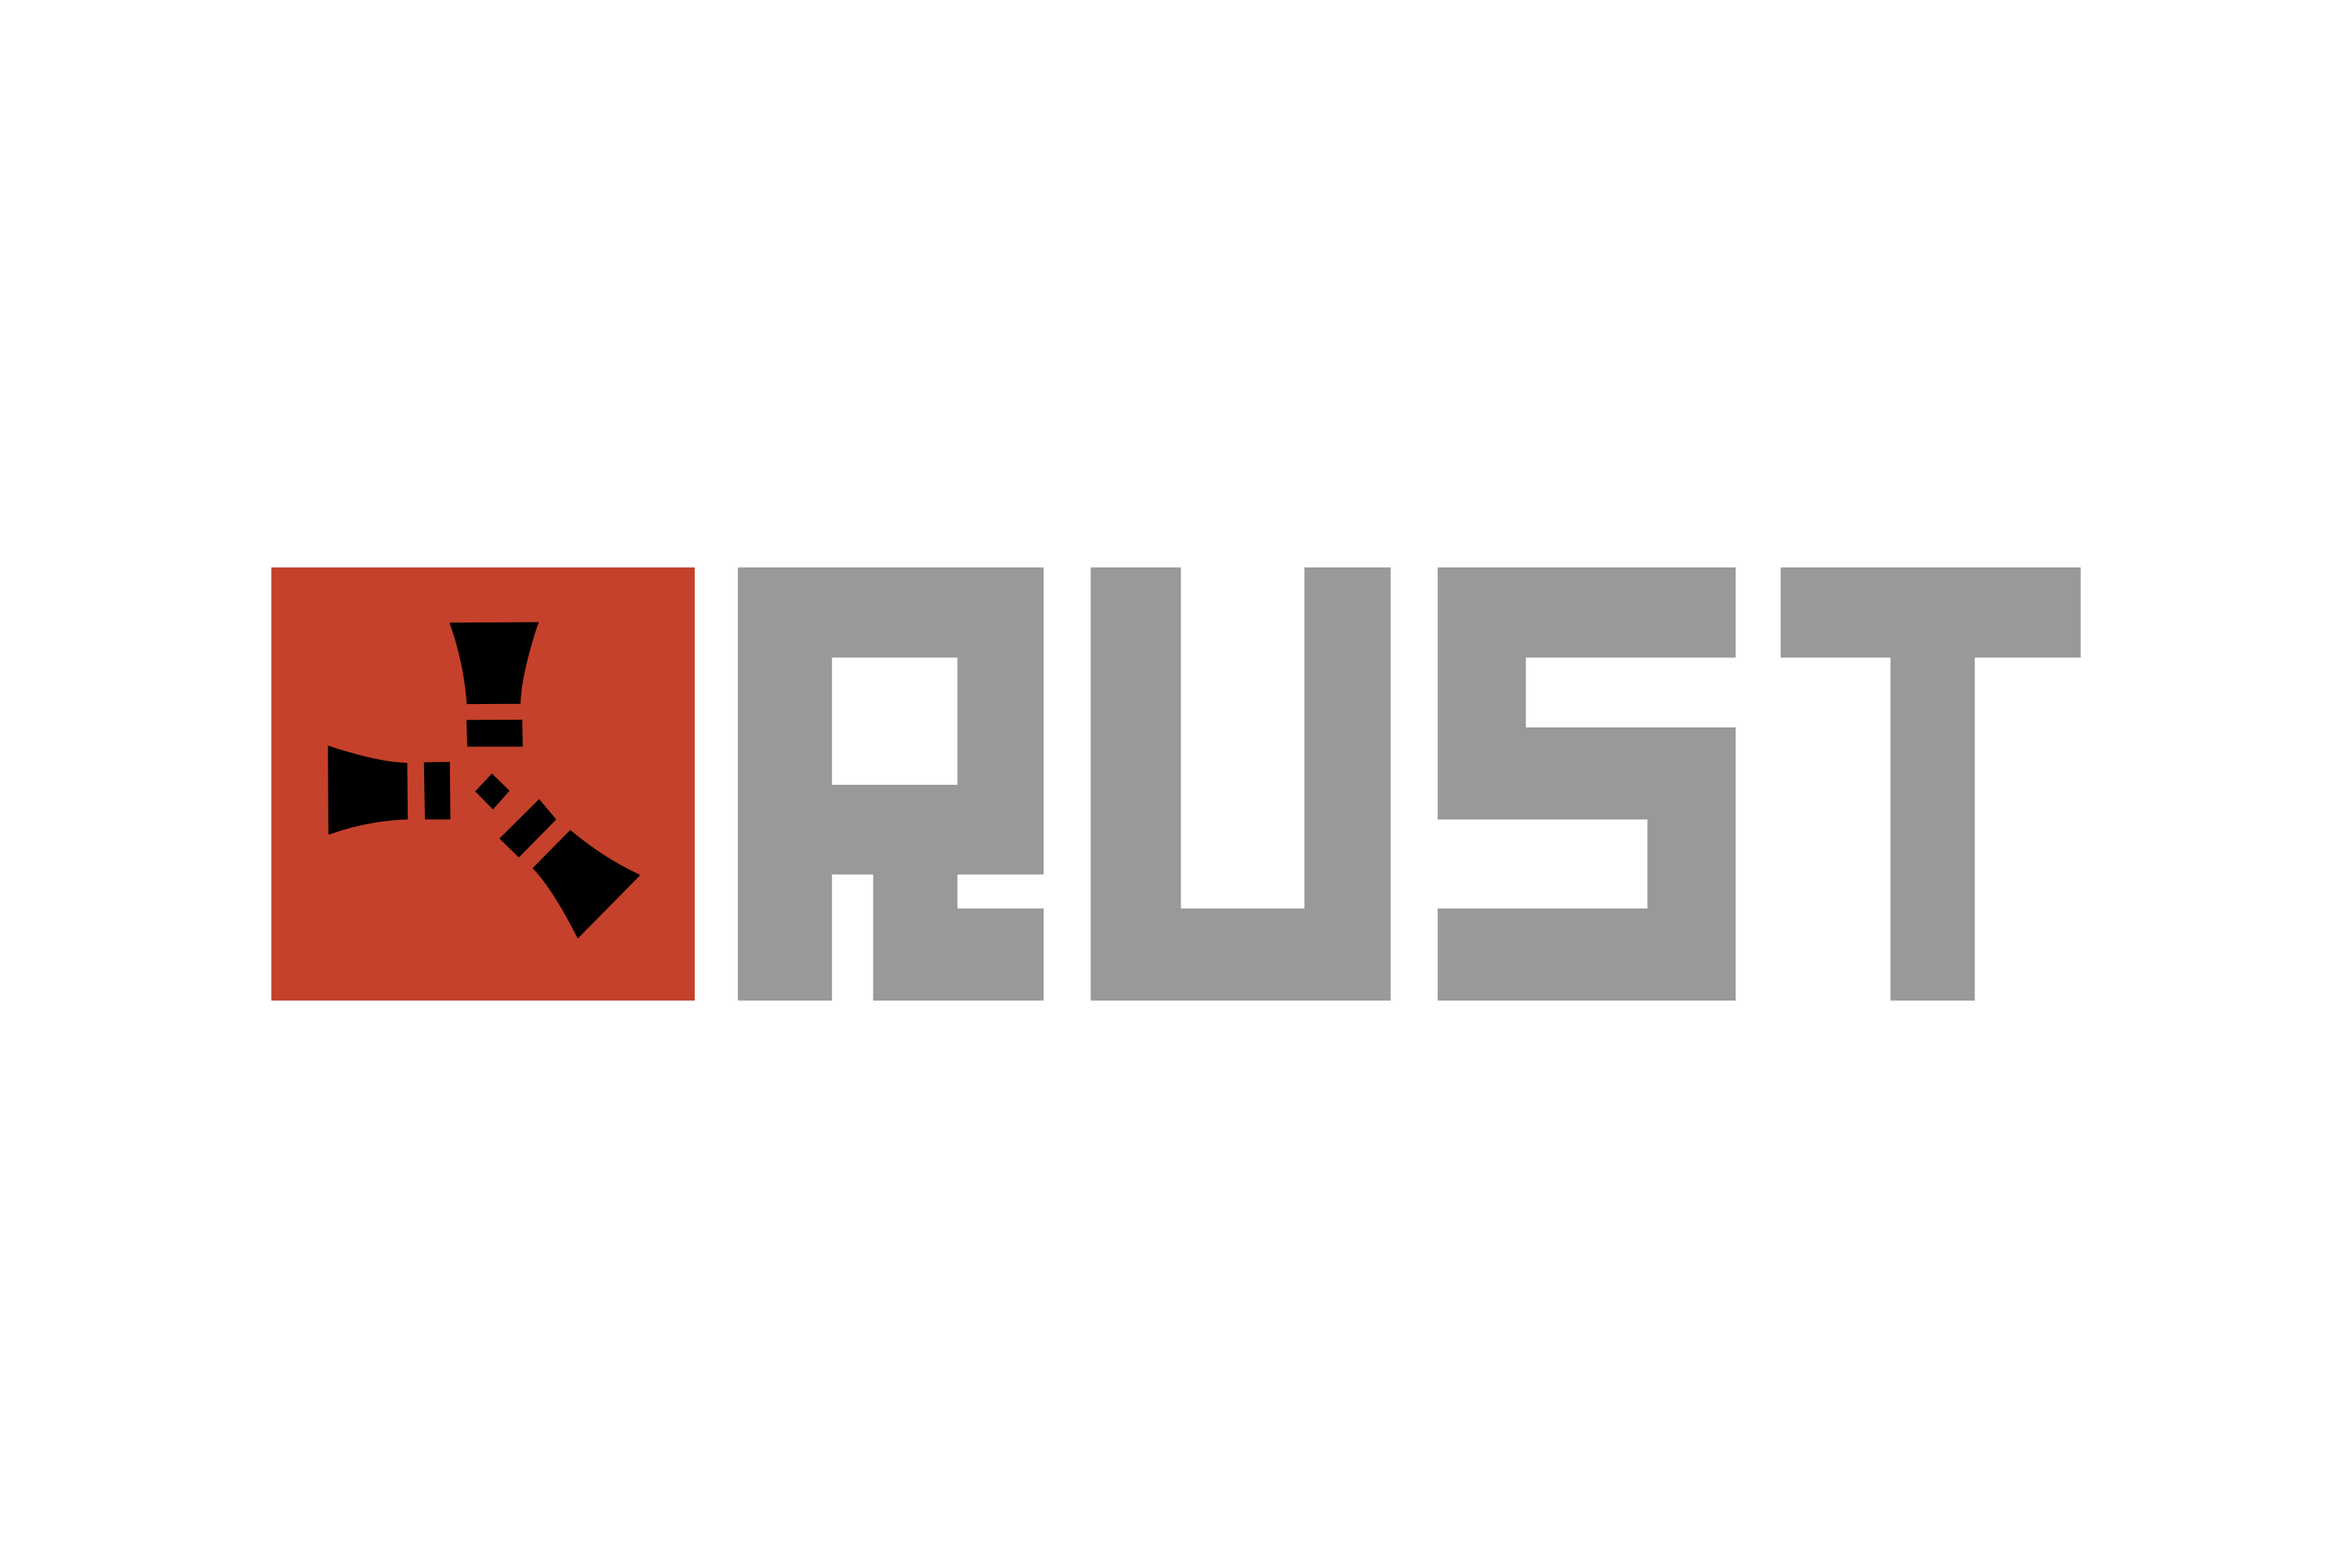 Download Rust Logo in SVG Vector or PNG File Format - Logo.wine